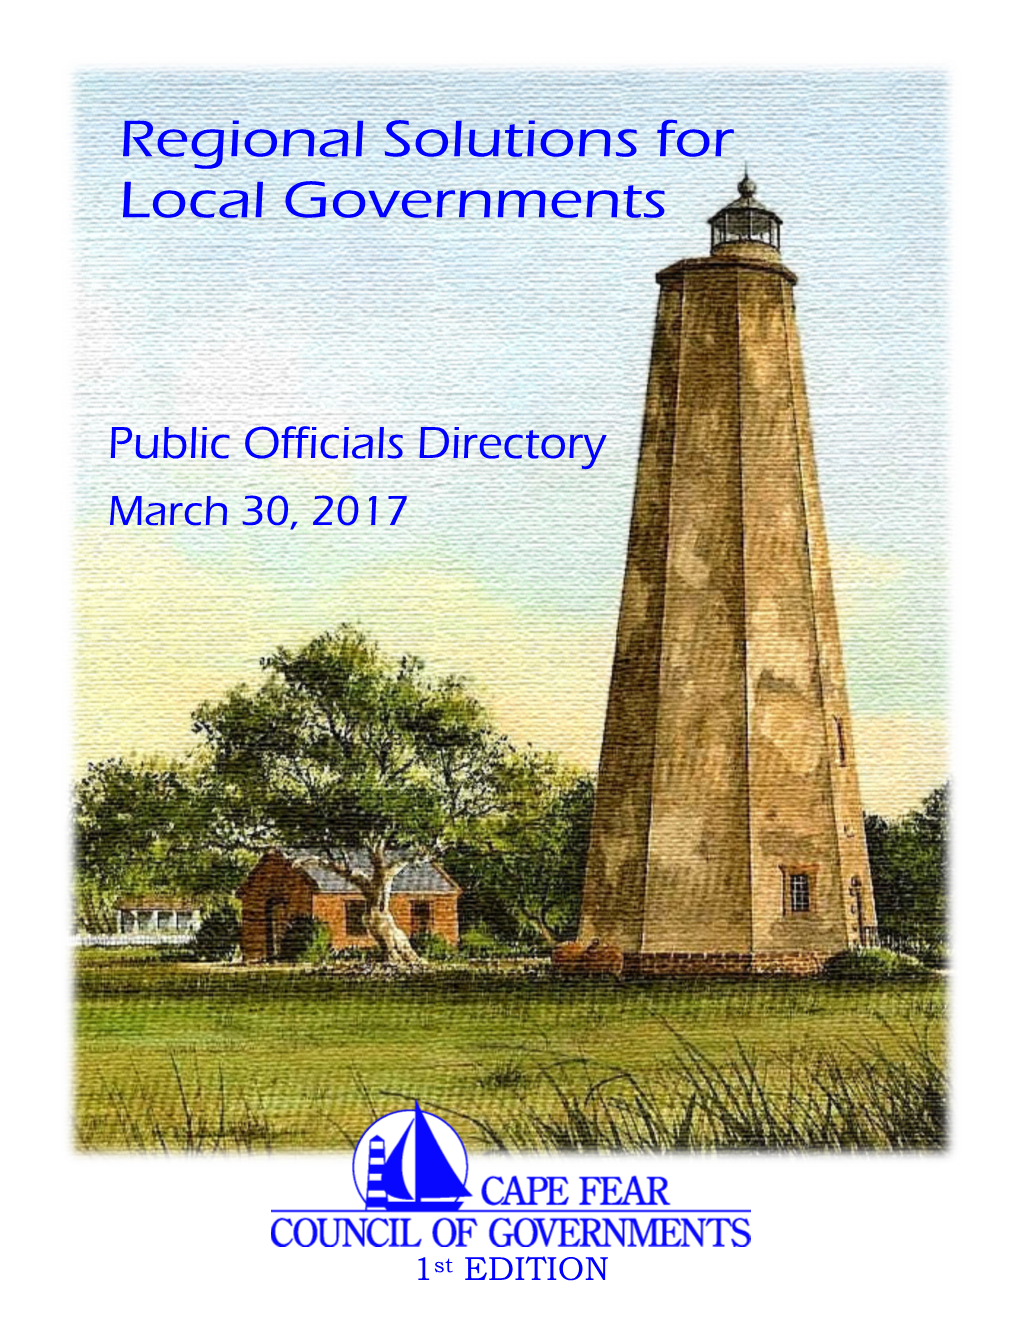 Public Officials Directory March 30, 2017